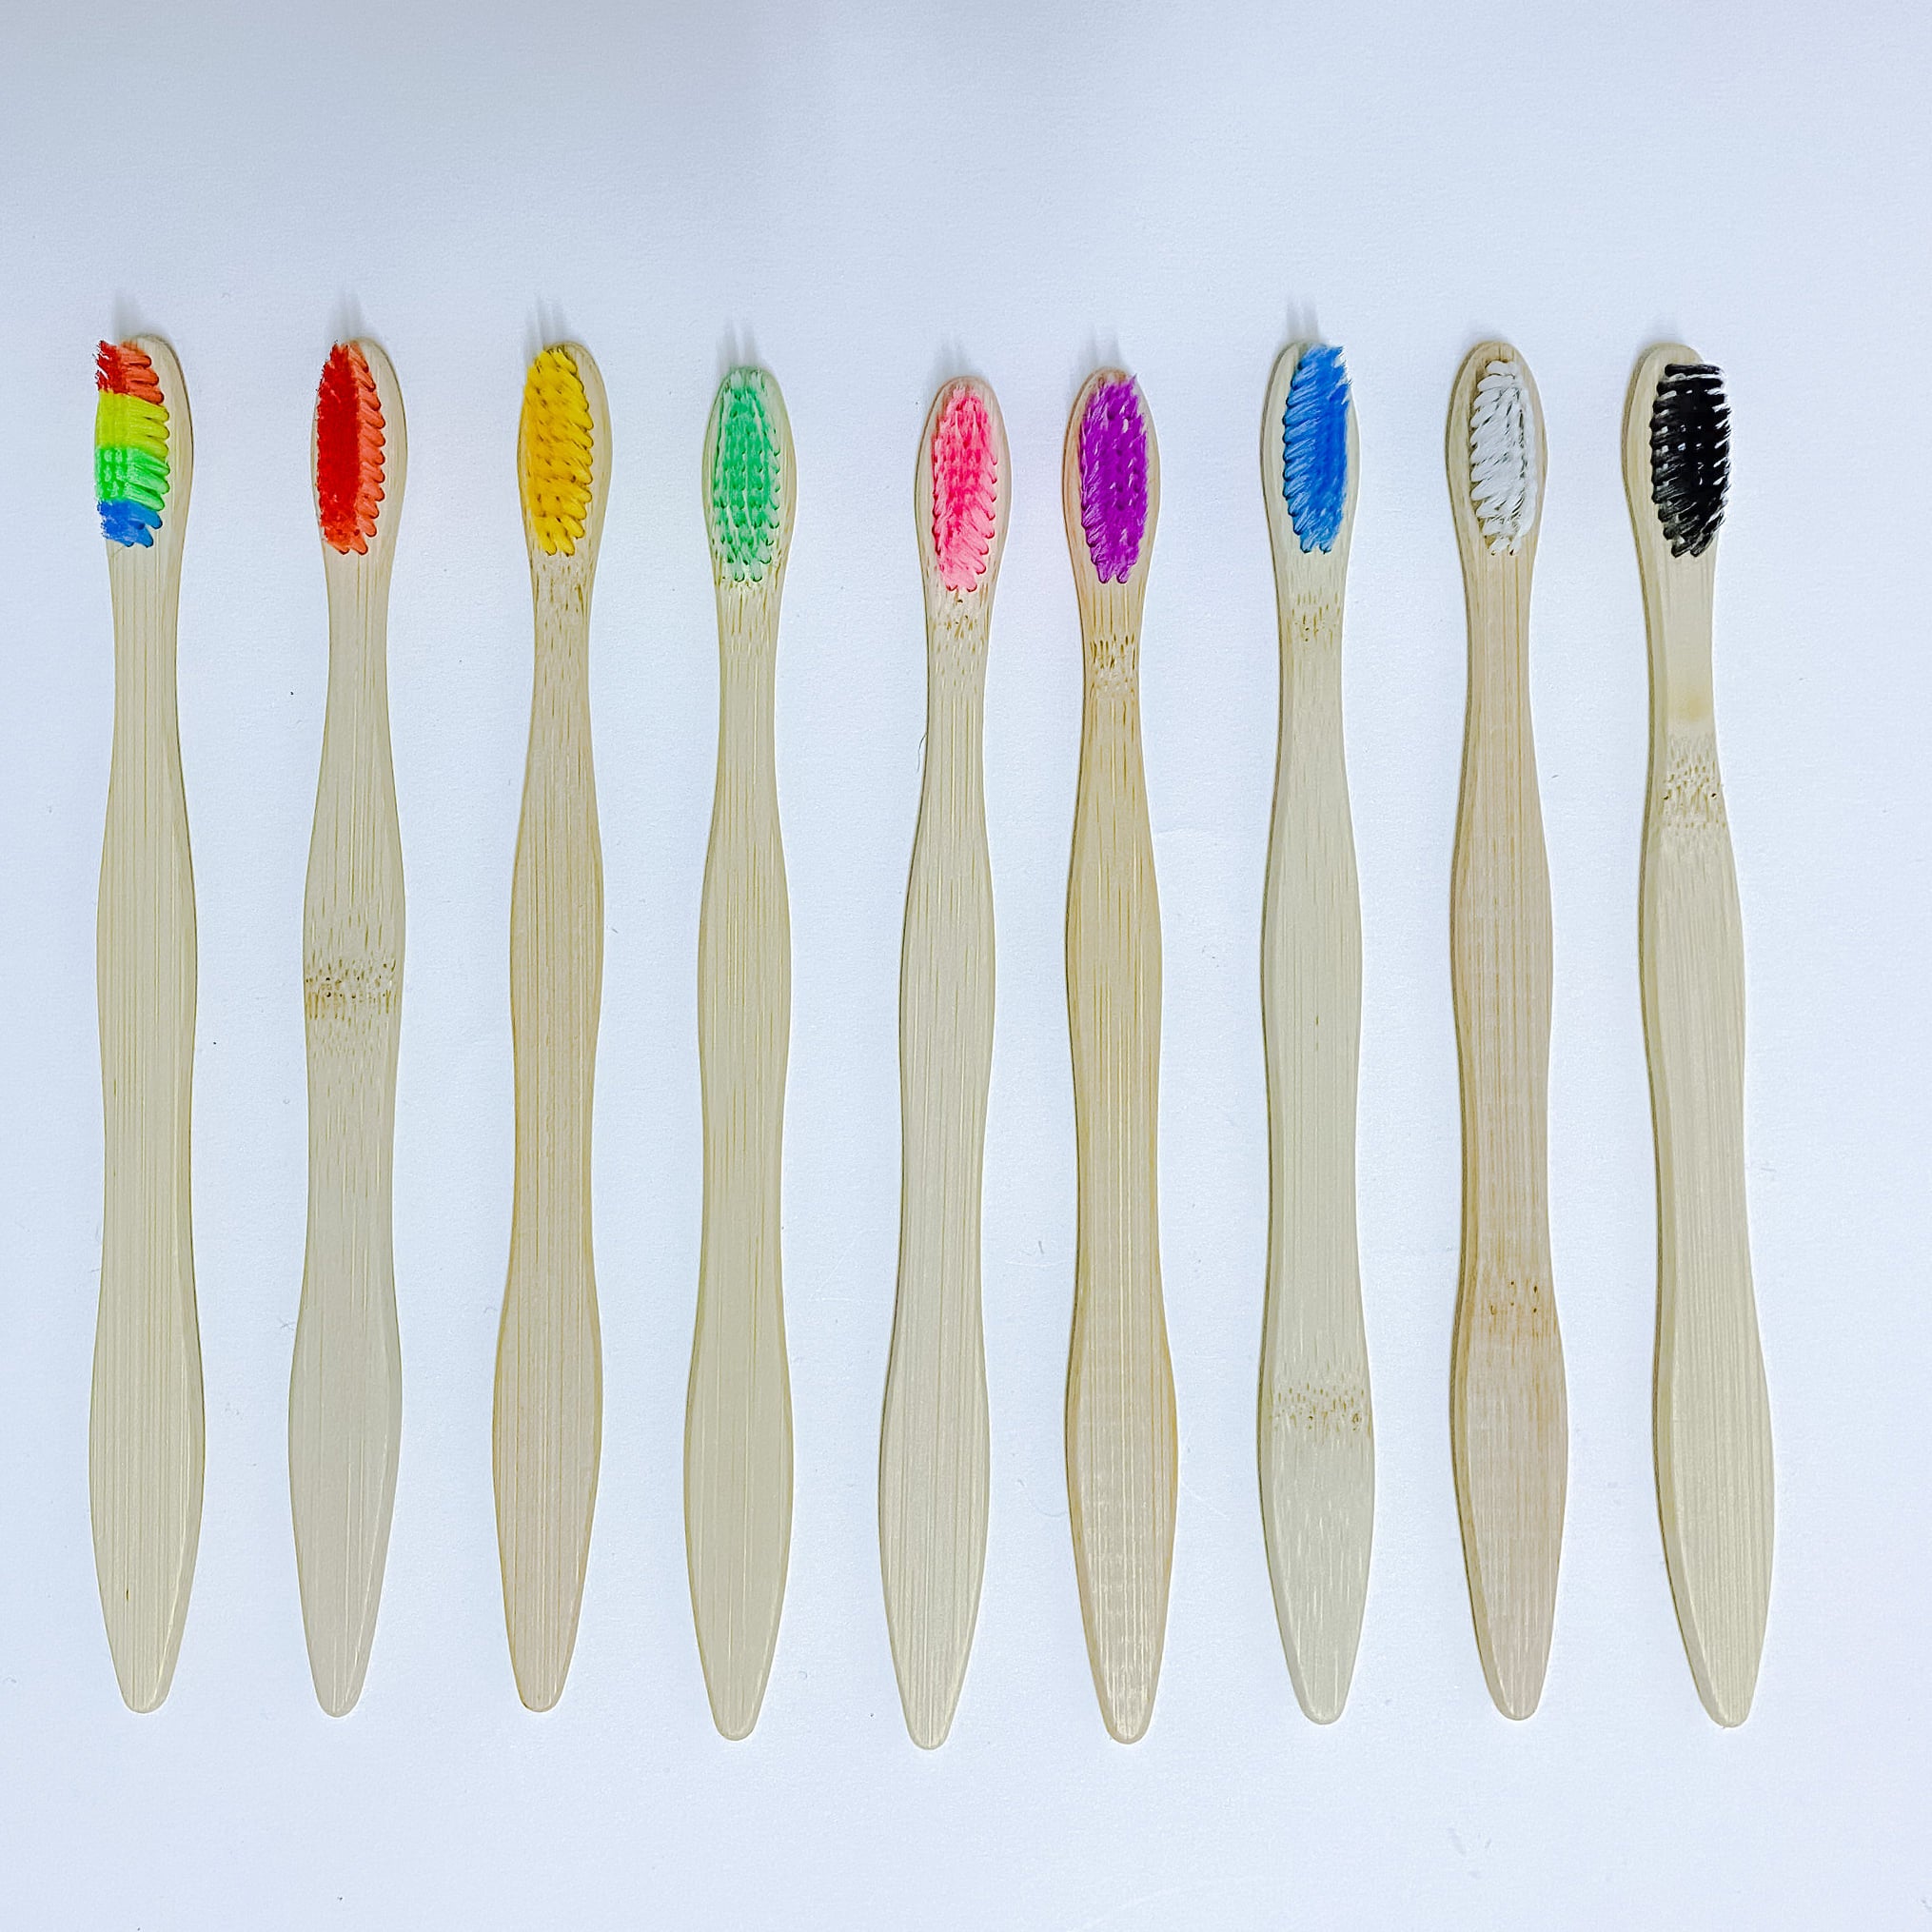 Bamboo Toothbrushes - فرشة سنان من خشب البامبو